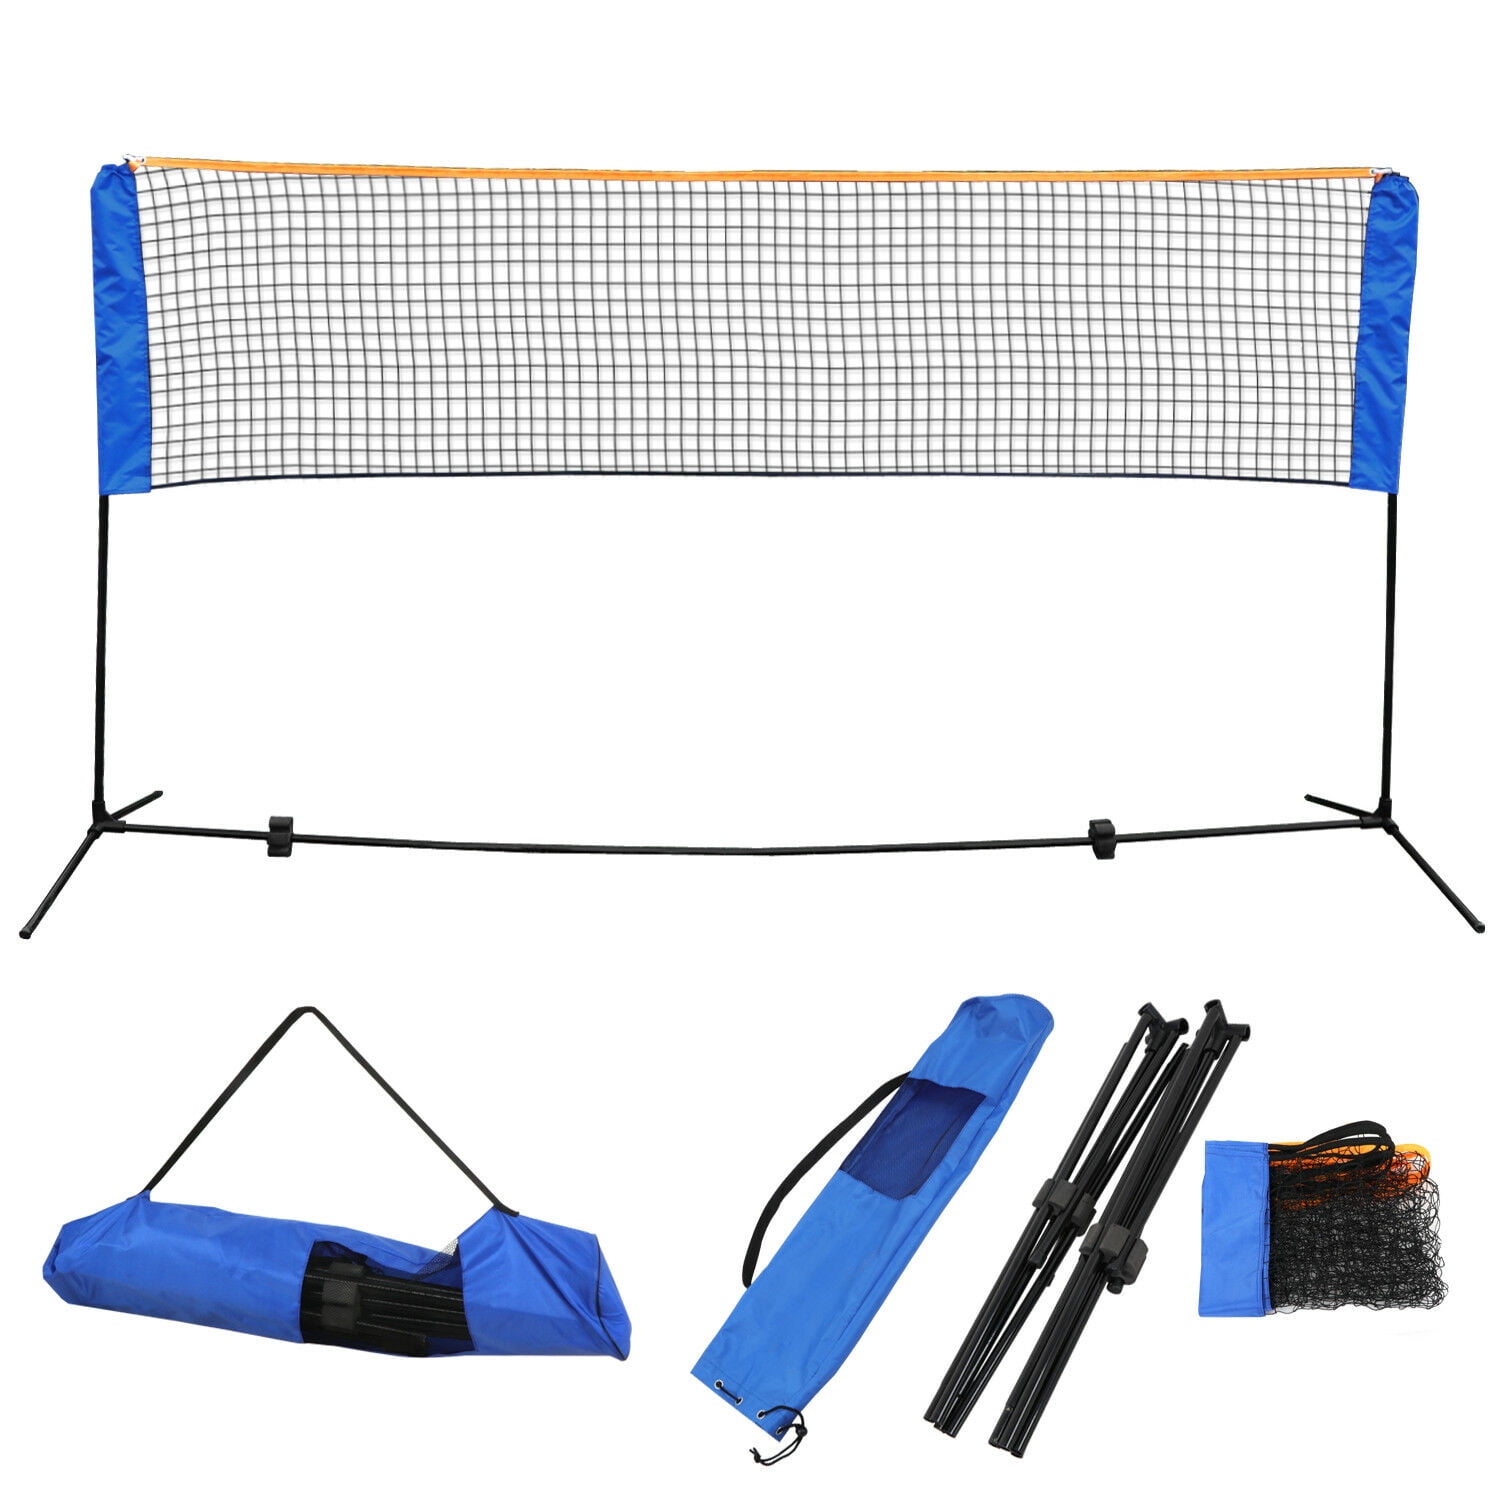 Portable Badminton Volleyball Tennis Net Standard Training Outdoor/Garden Sports 